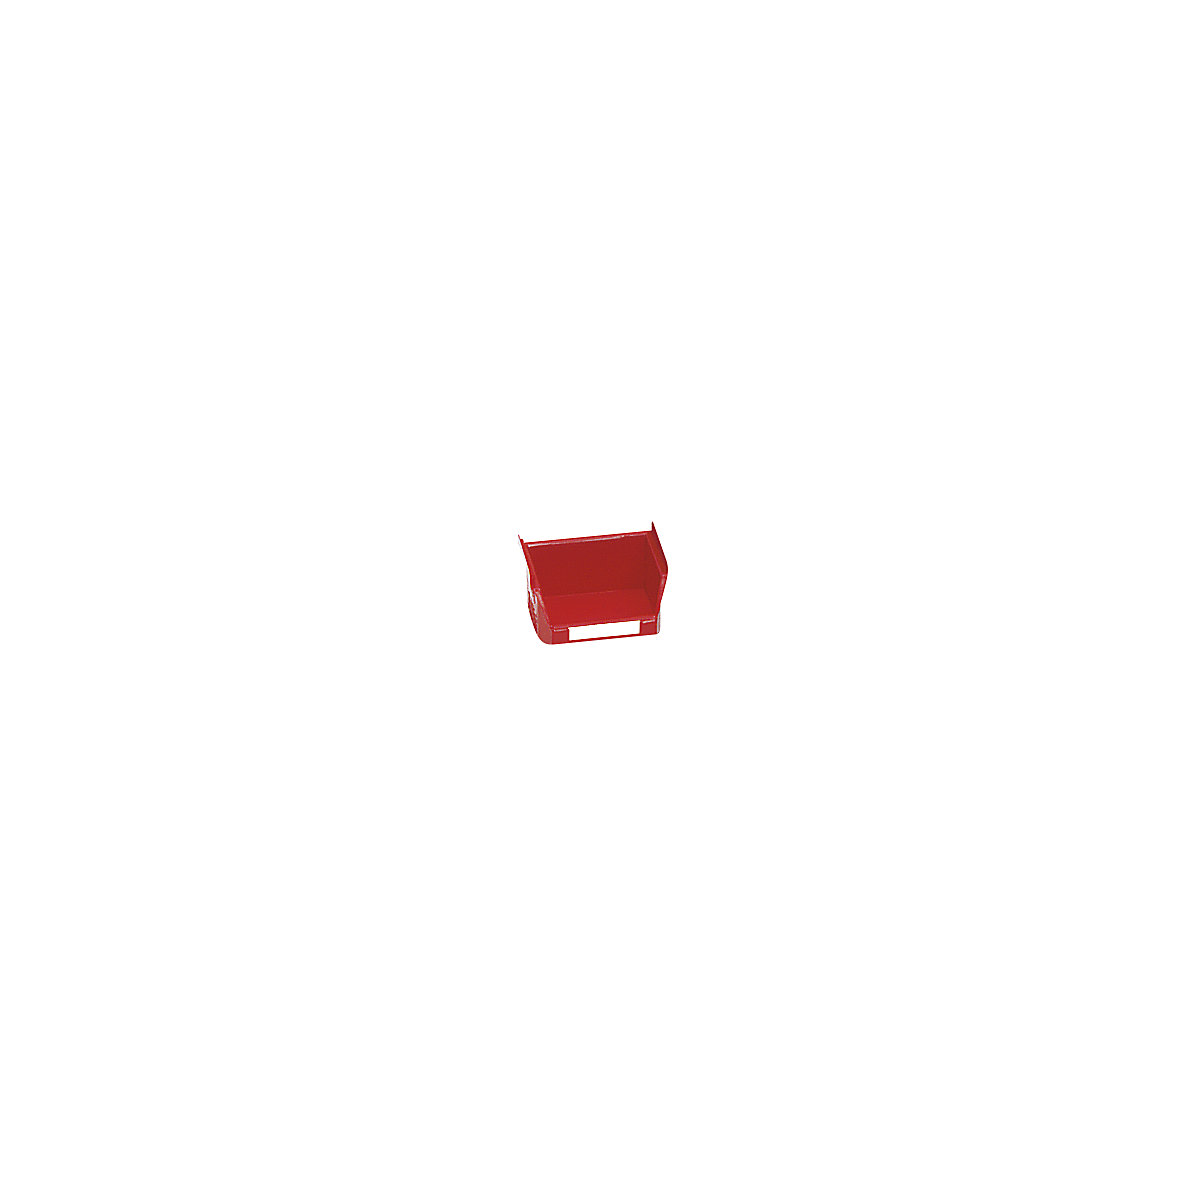 Caja visualizable de polietileno – mauser, L x A x H 85 x 100 x 50 mm, rojo, UE 50 unidades-8